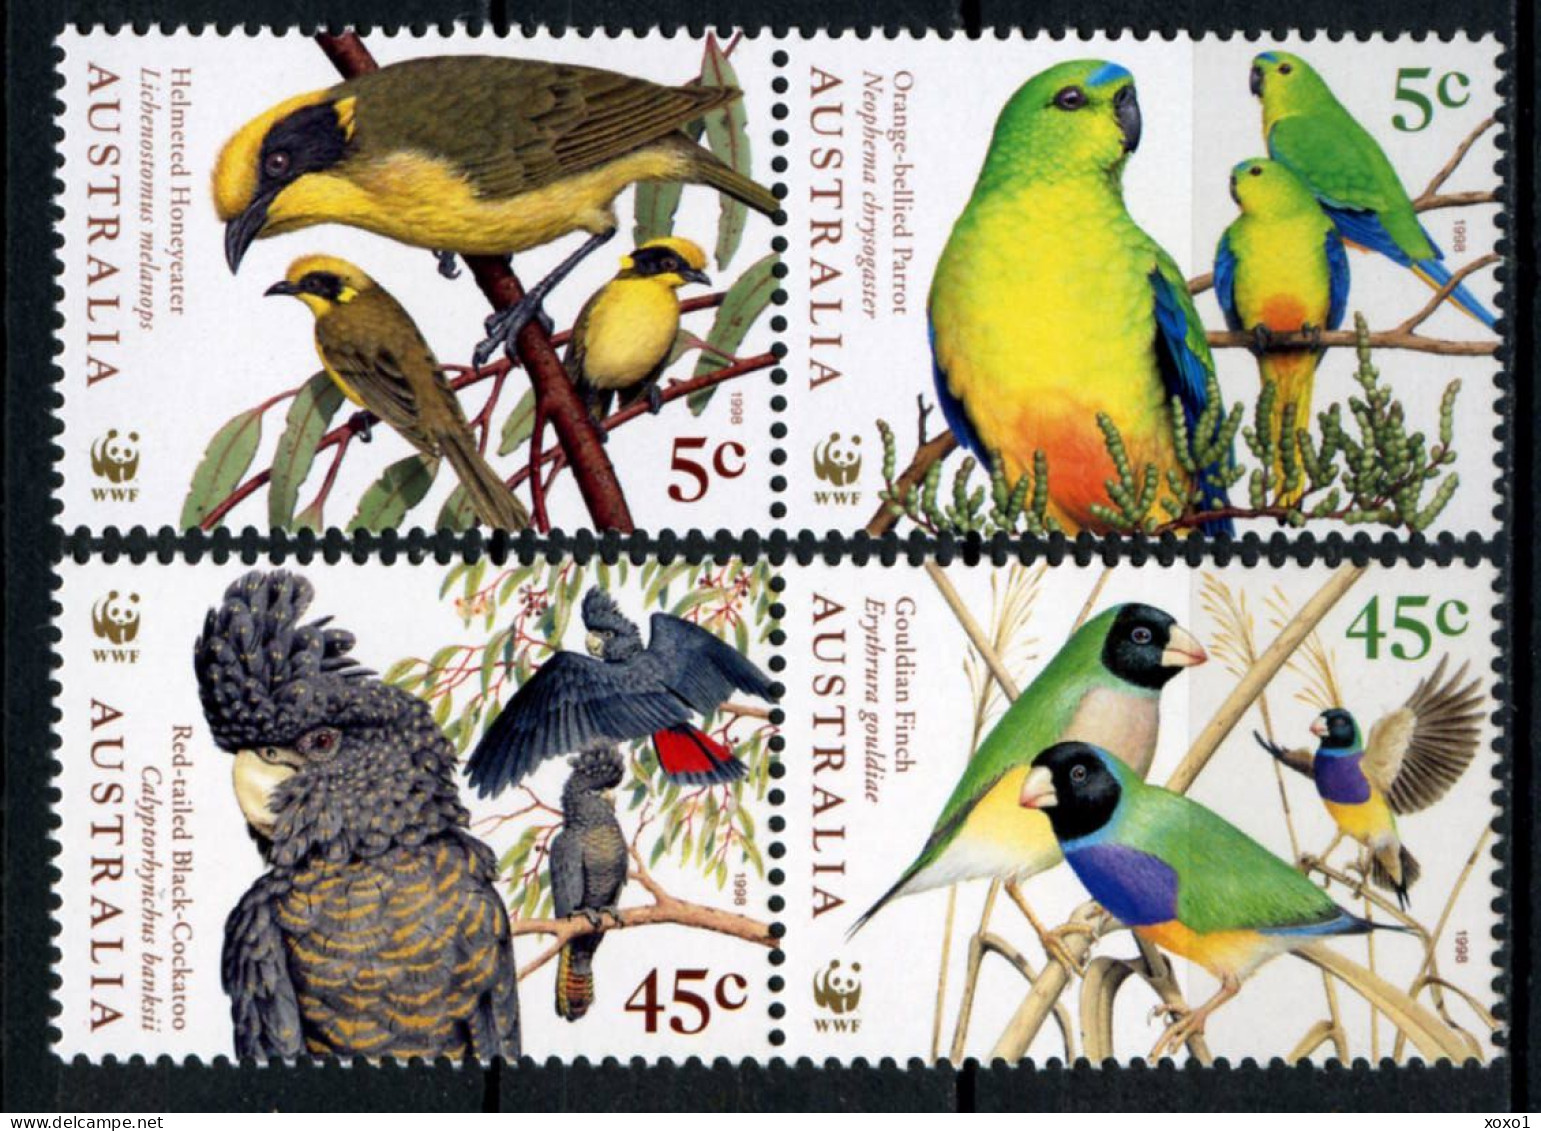 Australia 1998 MiNr. 1744 - 1747  Australien Birds Parrots WWF 4v  MNH**  4.50 € - Papageien